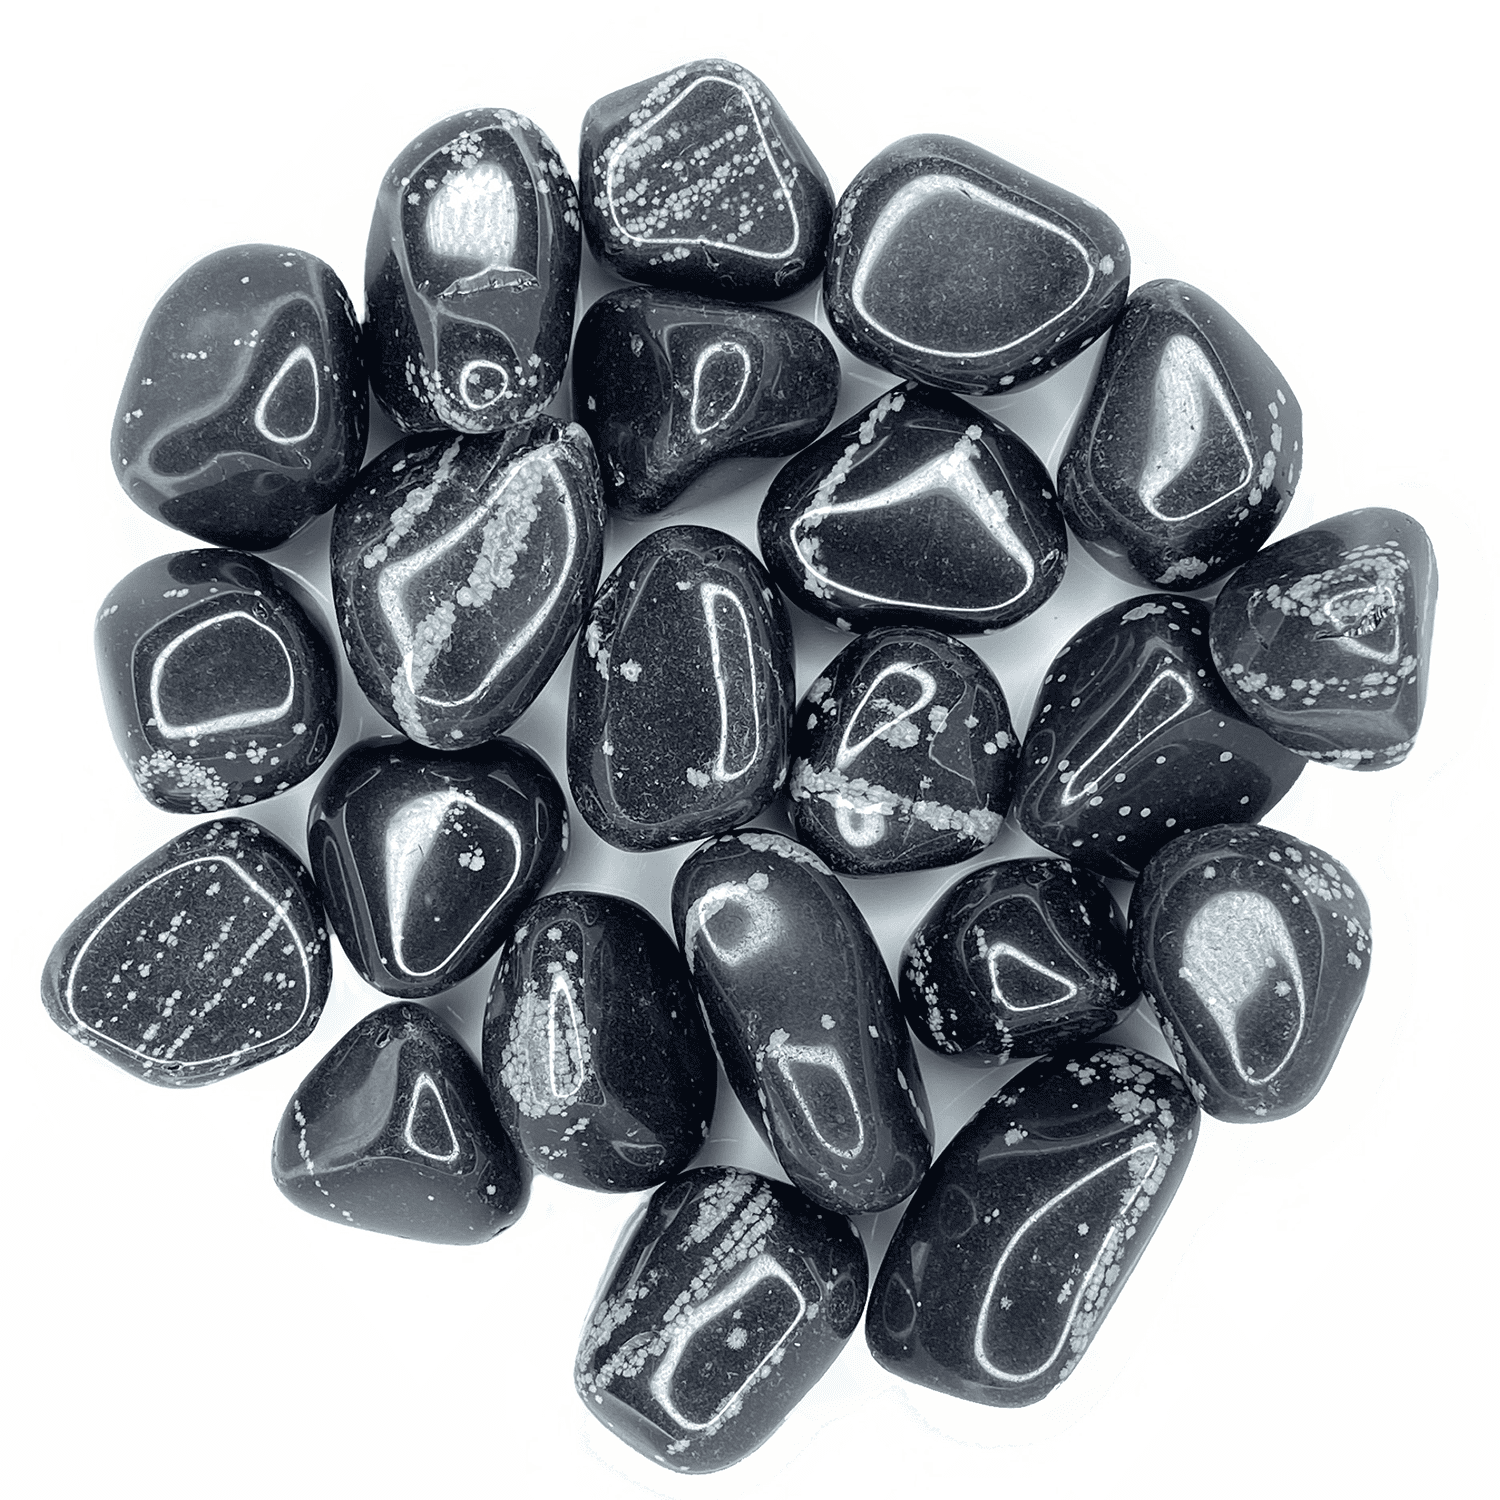 1/2 lb bulk stones A GOLD OBSIDIAN BLACK med-lg tumbled 